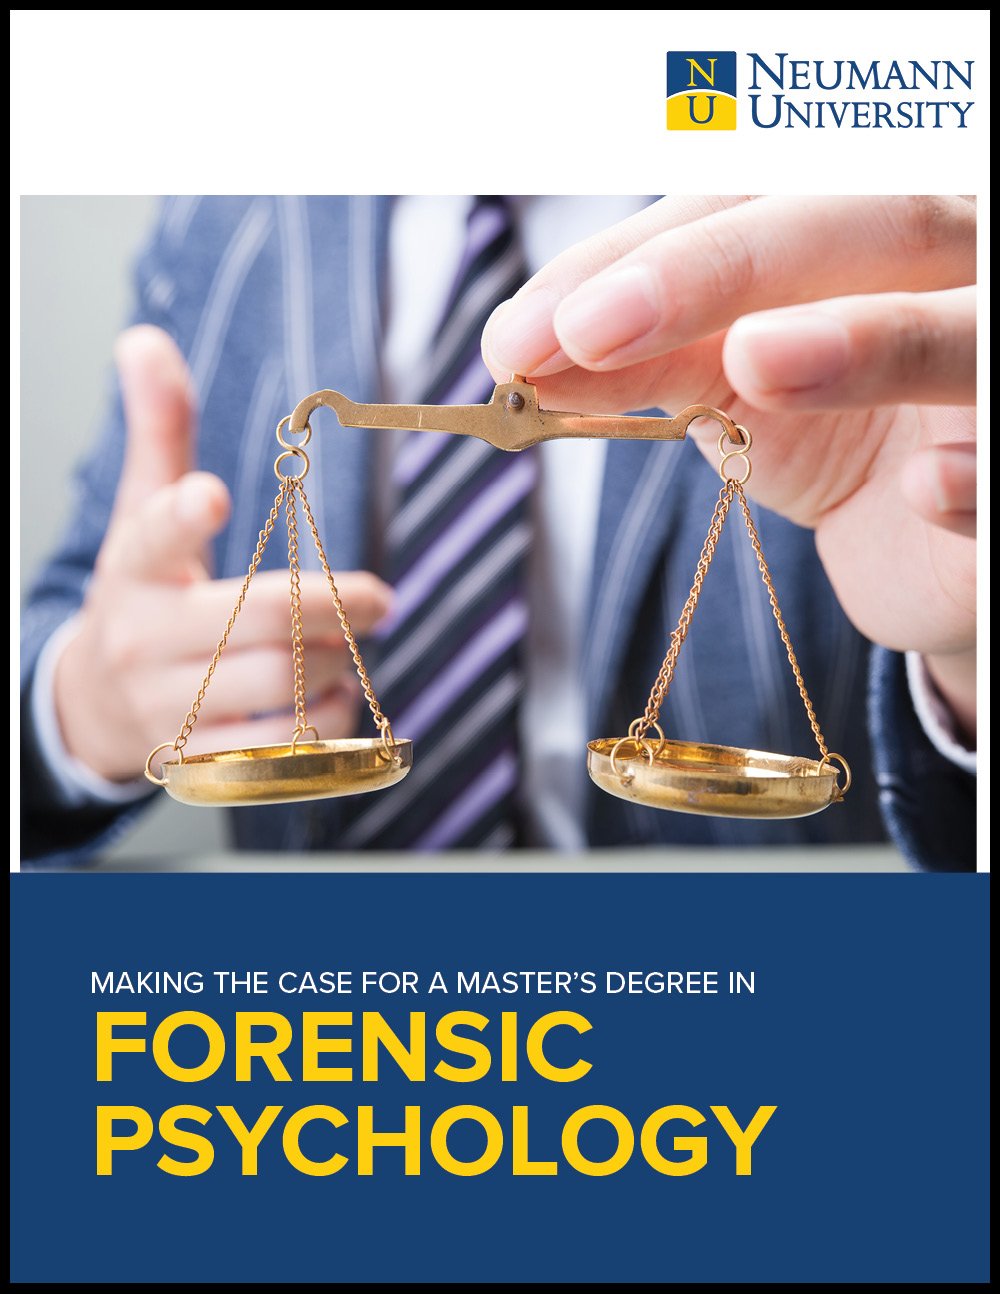 MS in Forensic Psychology Neumann University